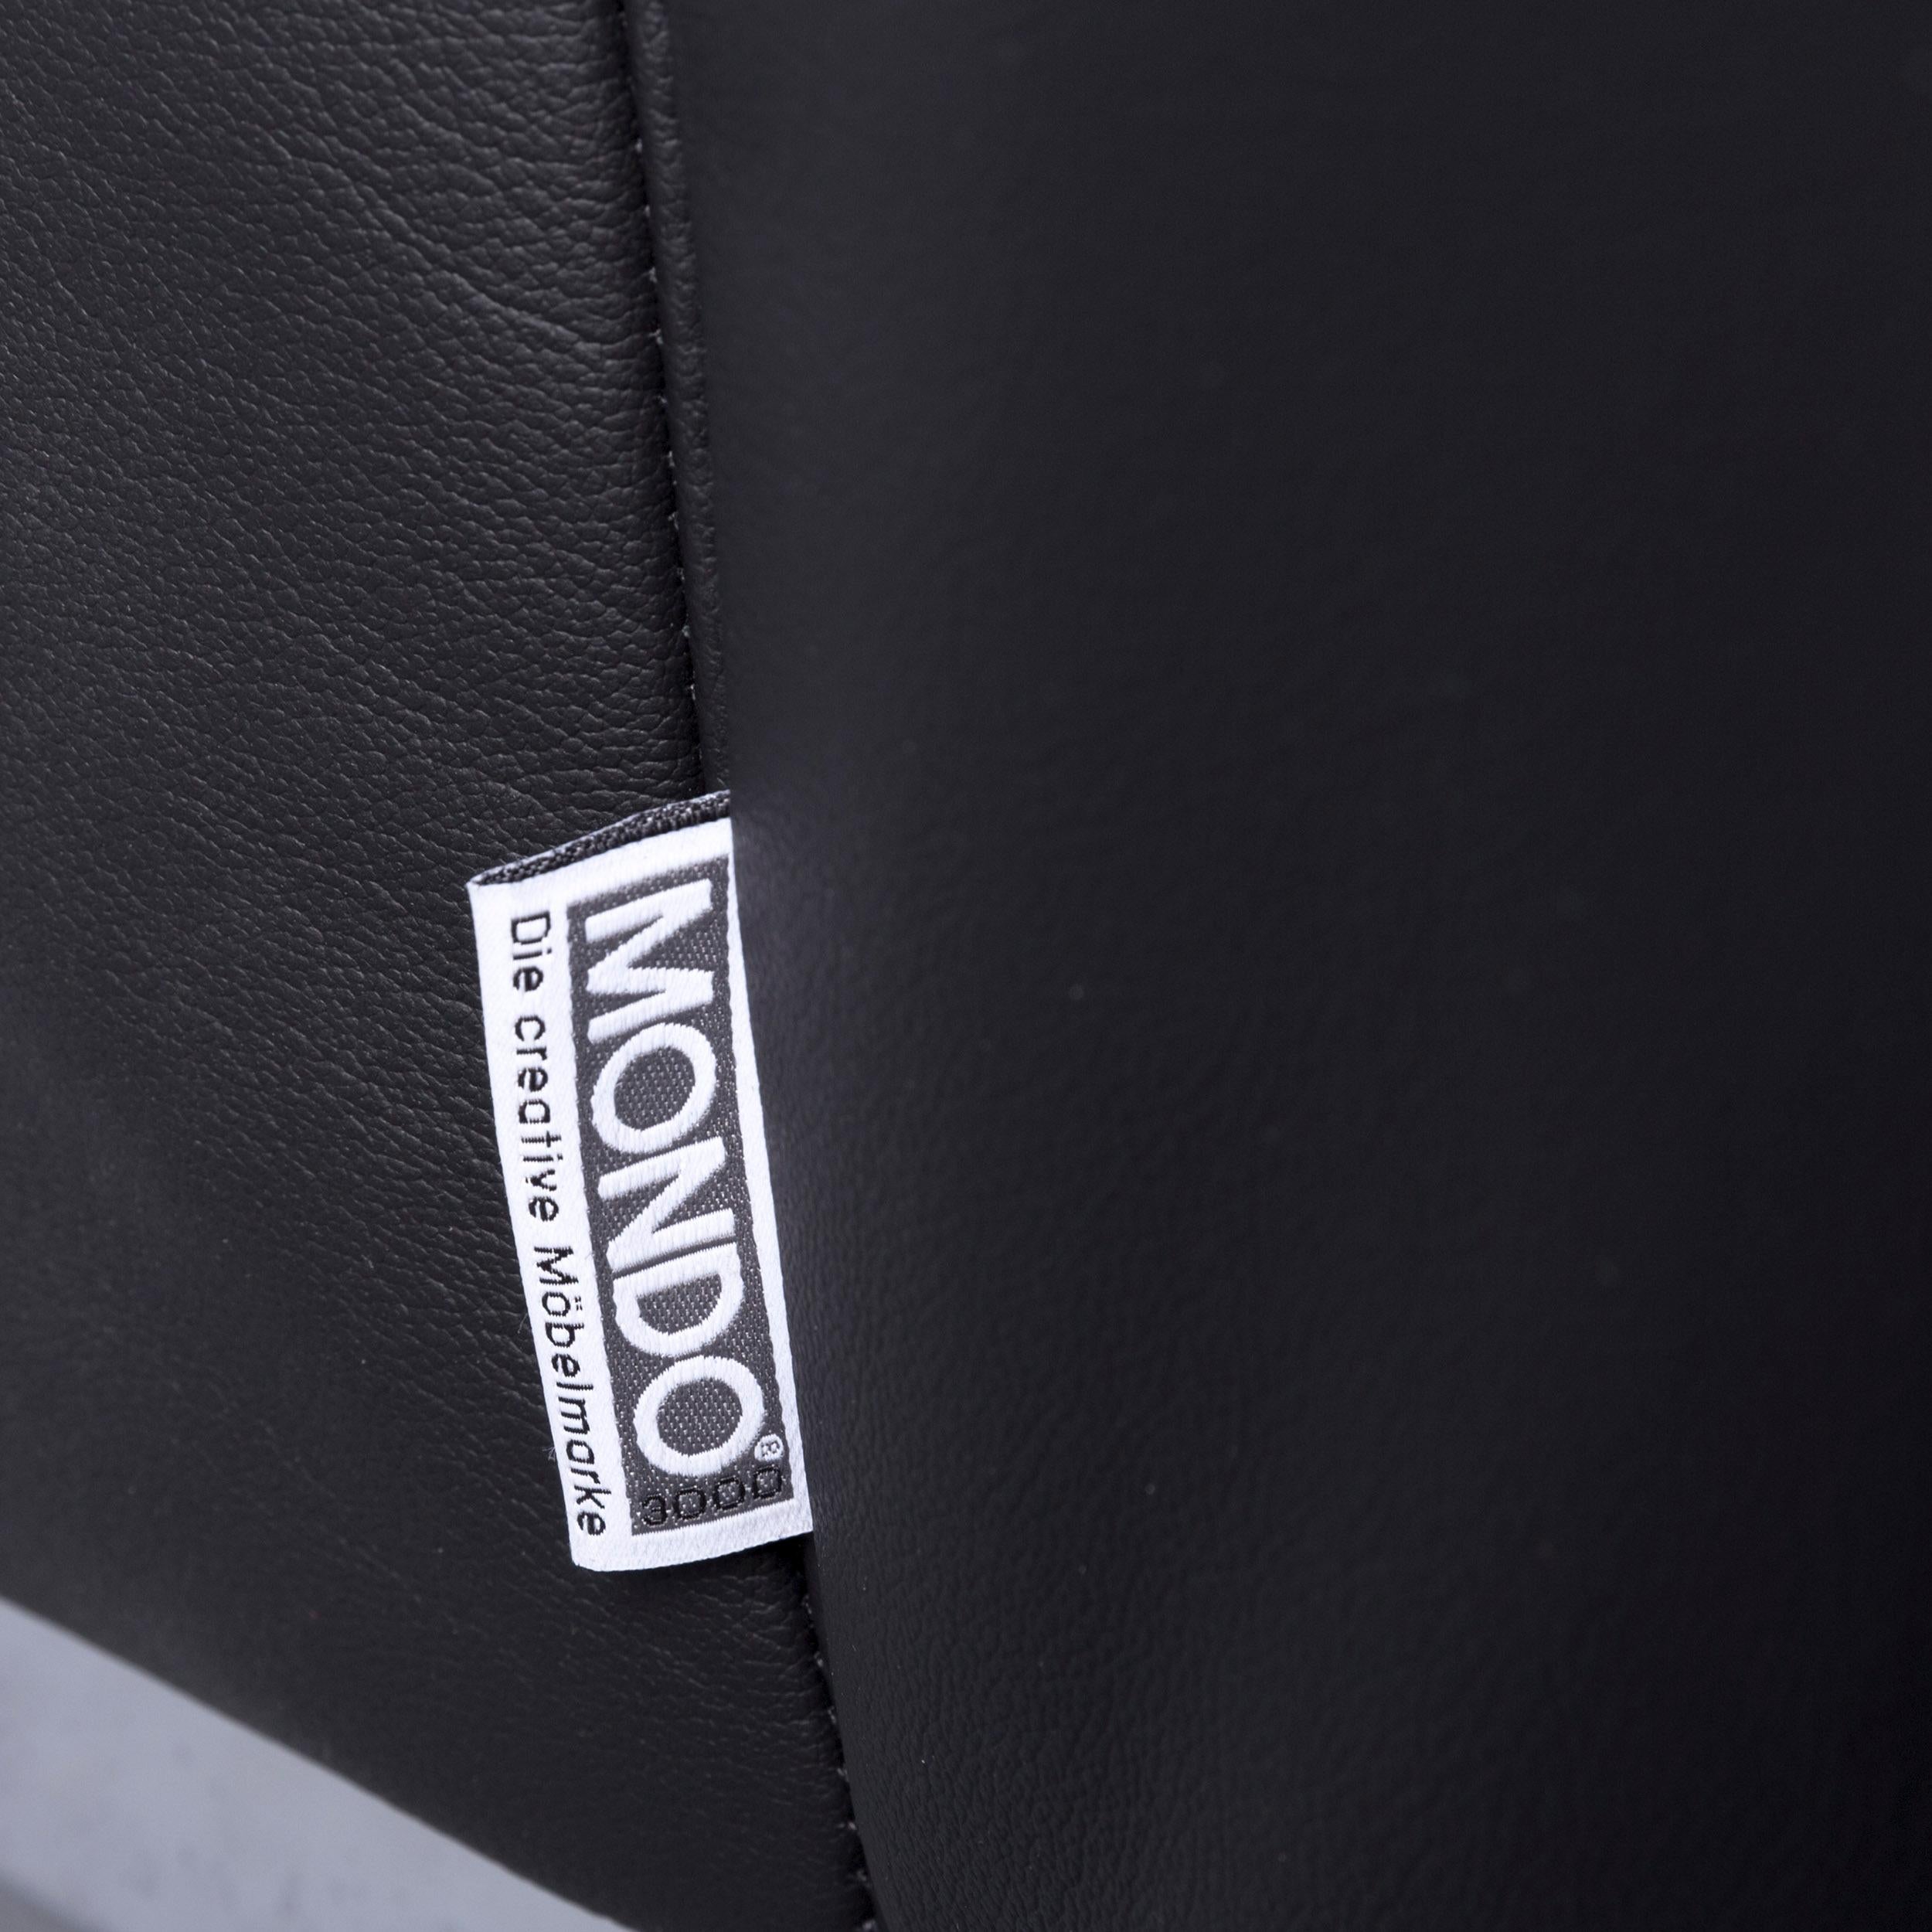 Mondo Relaxa Designer Three-Seat Sofa Leather Black Function Couch 6